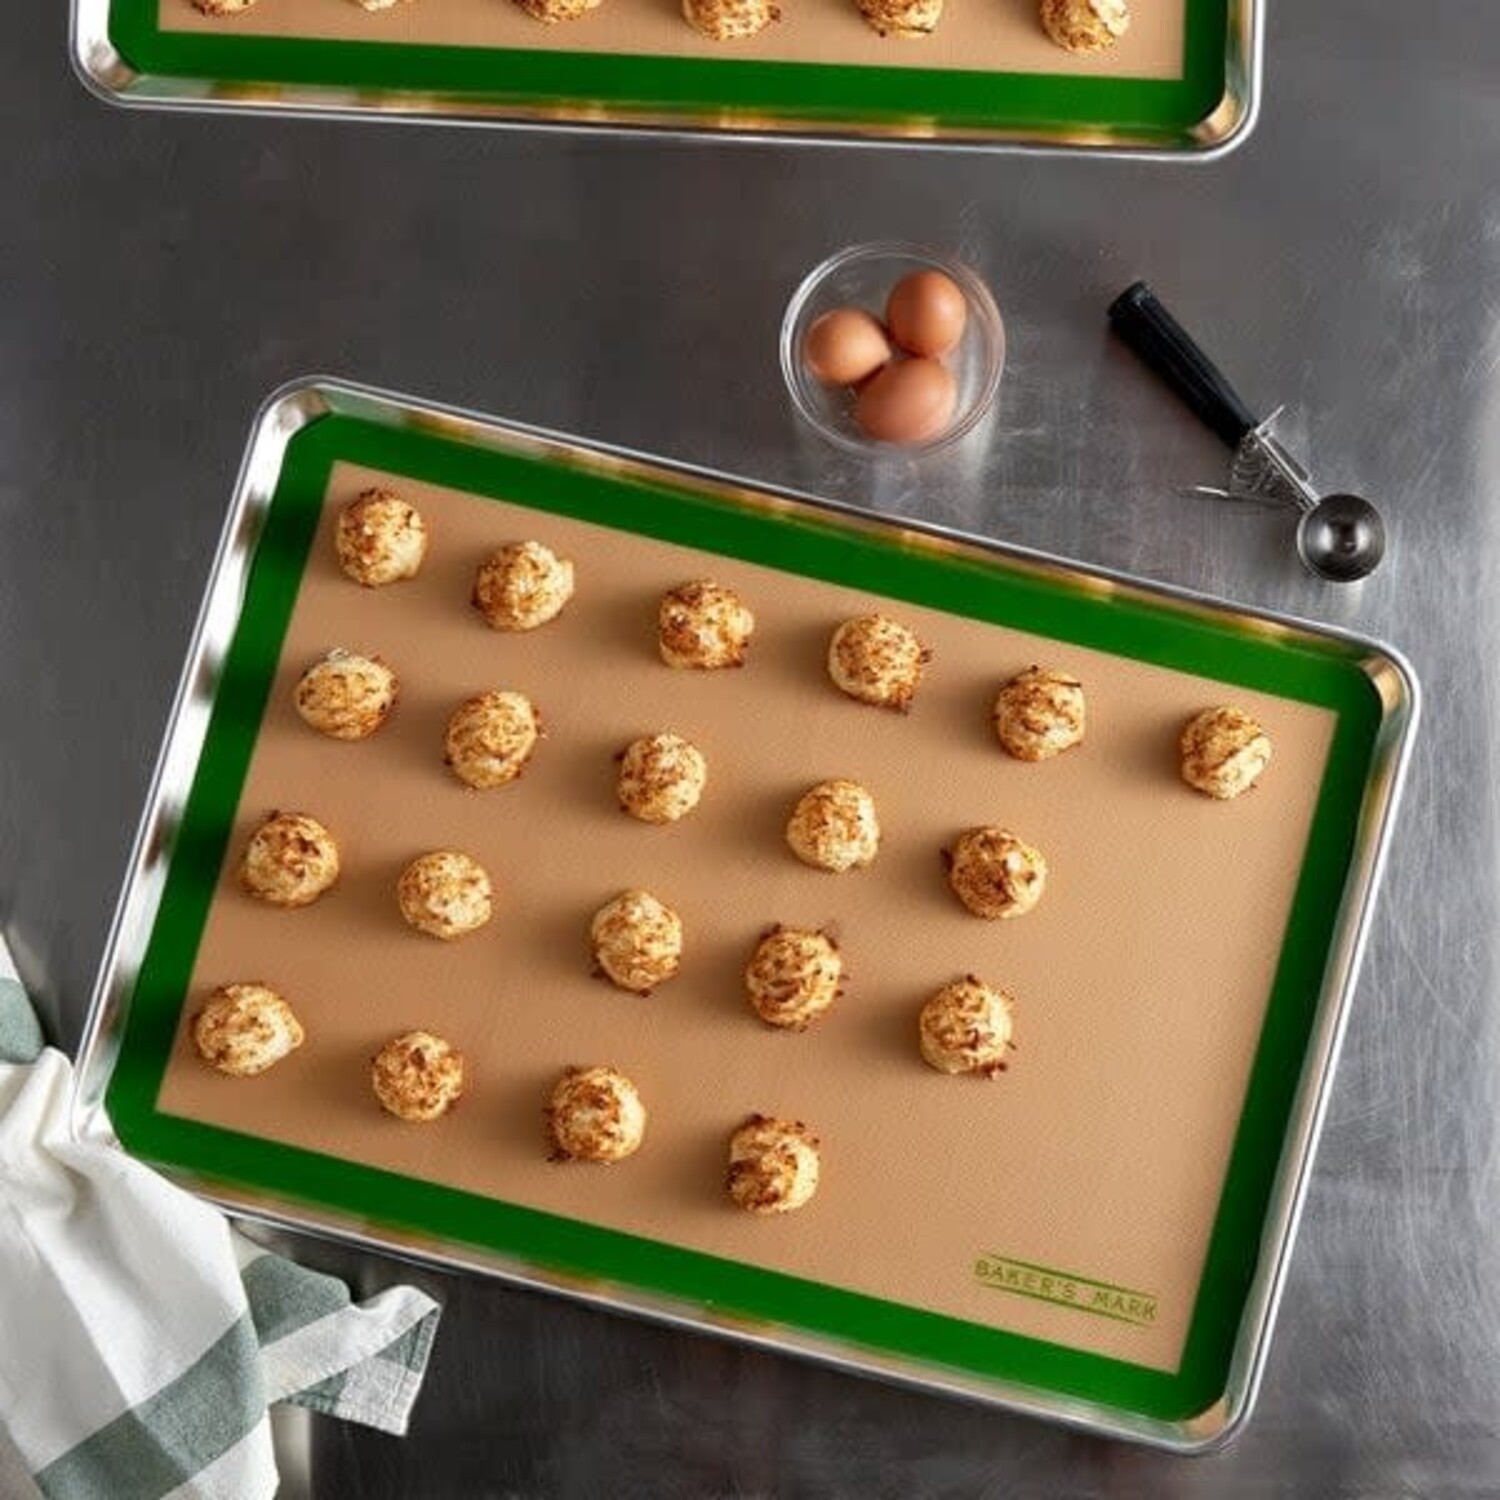 Silpat Pefect Cookie Silicone Baking Mat, Orange, 11.5 x 16.5